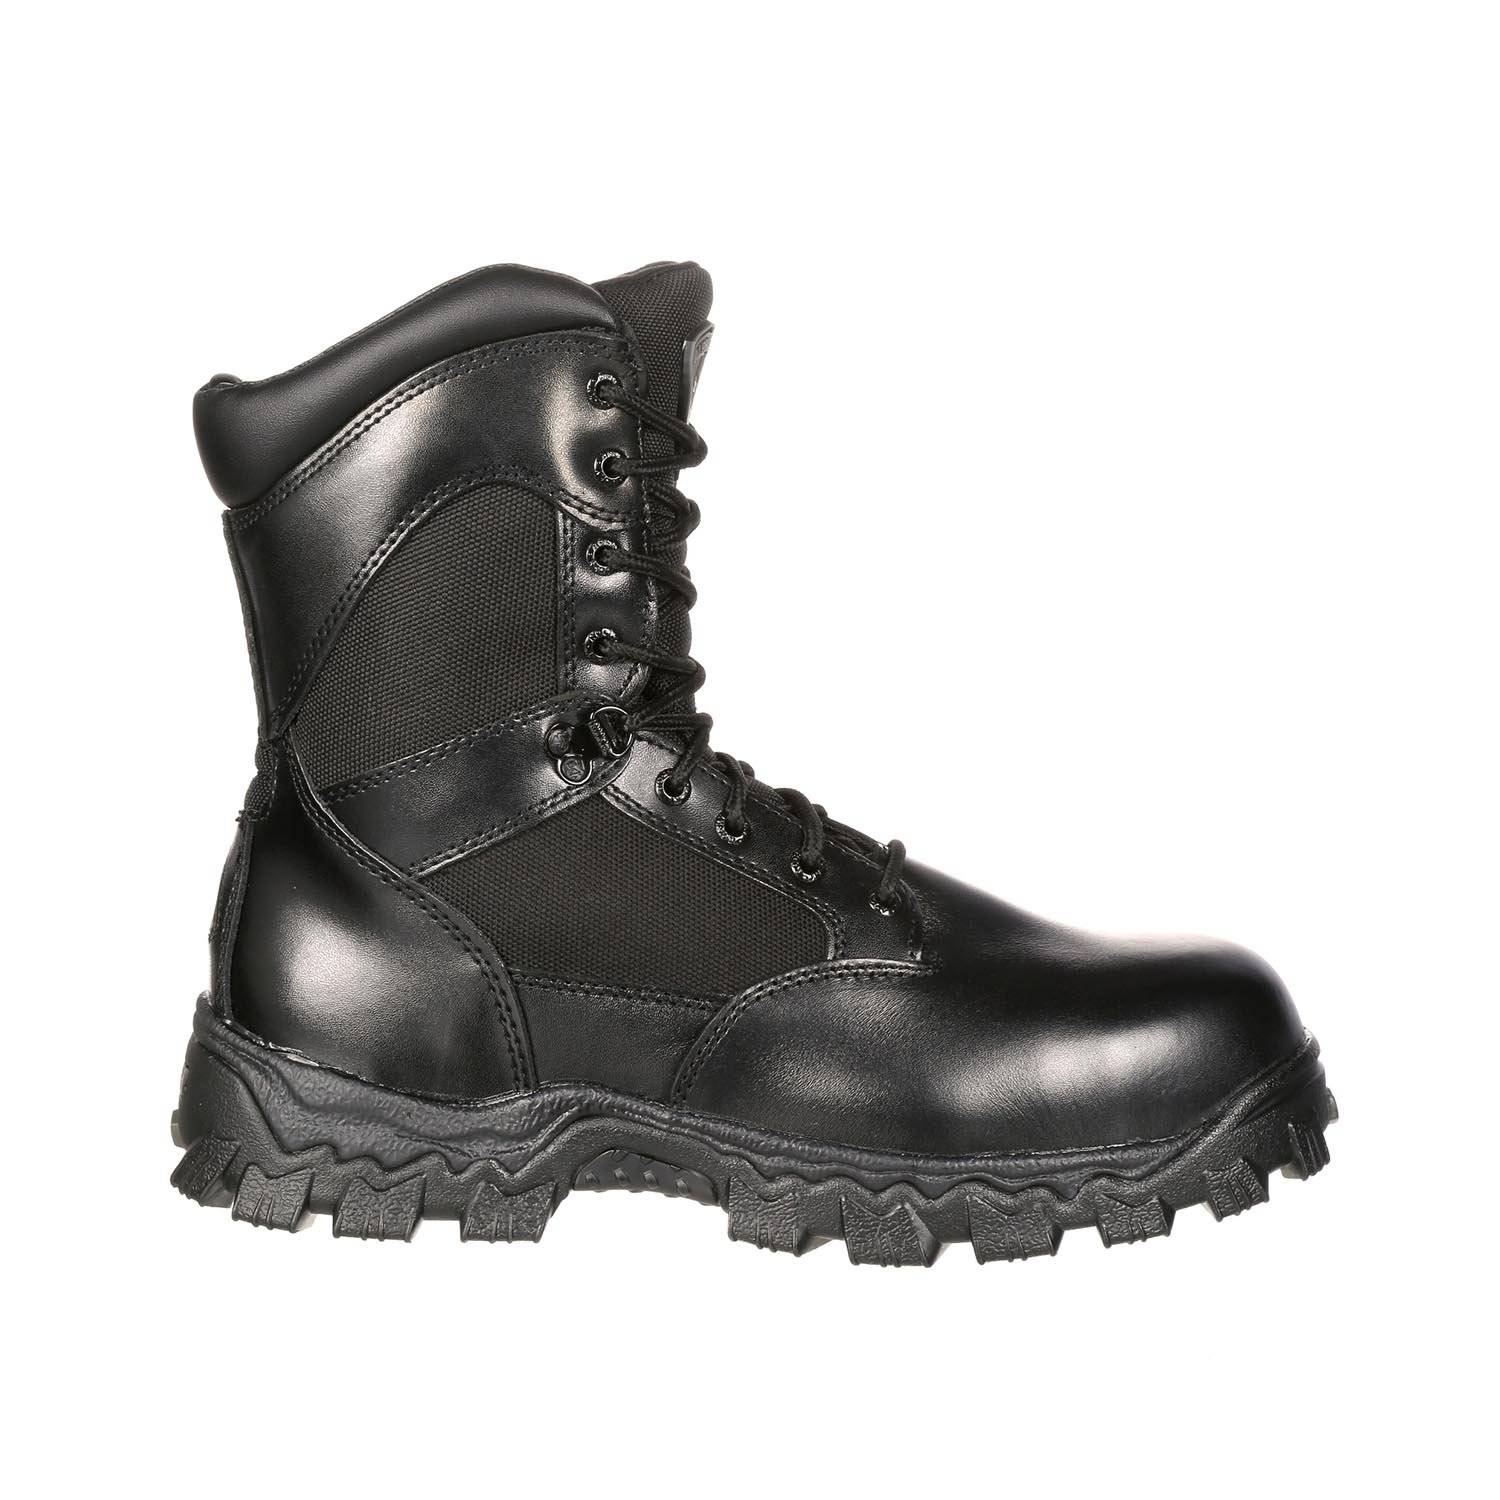 waterproof zipper boots